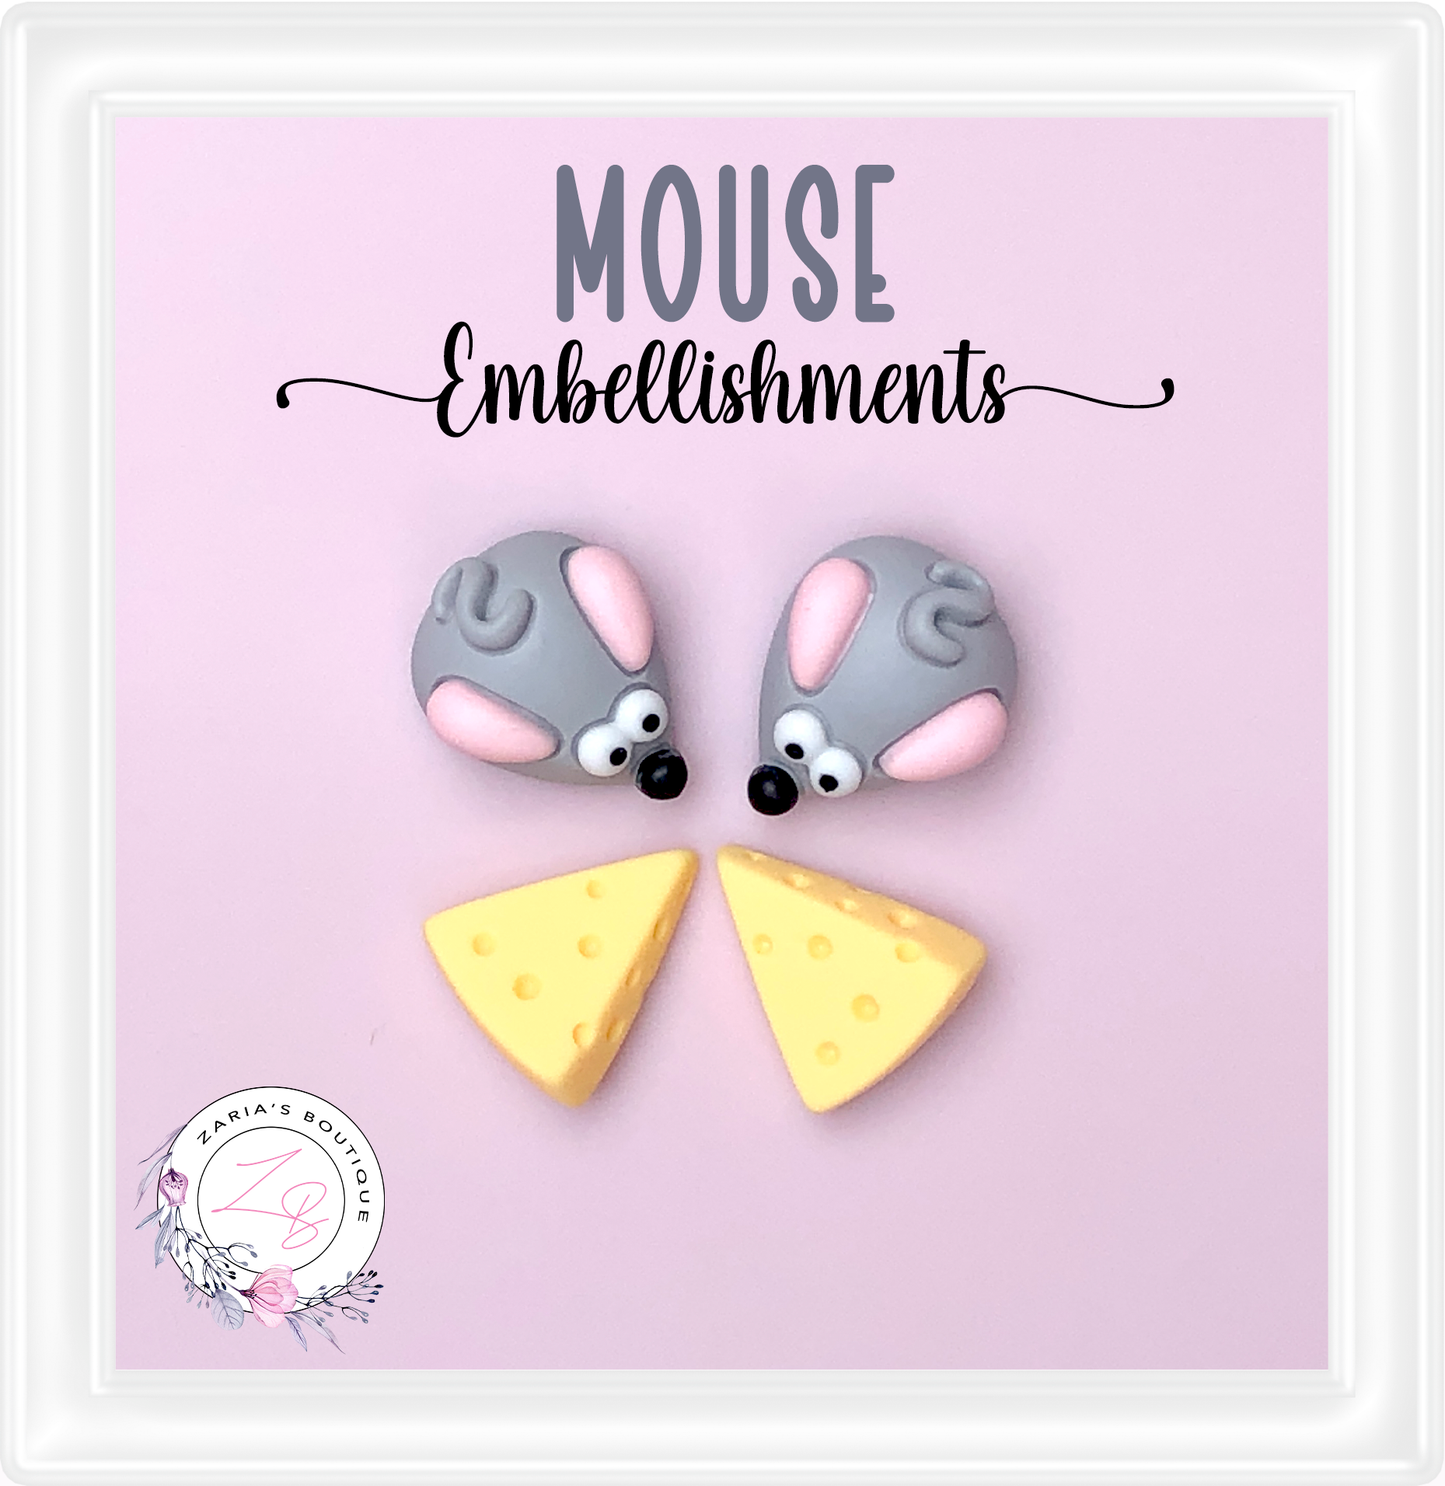 ⋅ Mice & Cheese Embellishments ⋅ Resin Flatbacks ⋅